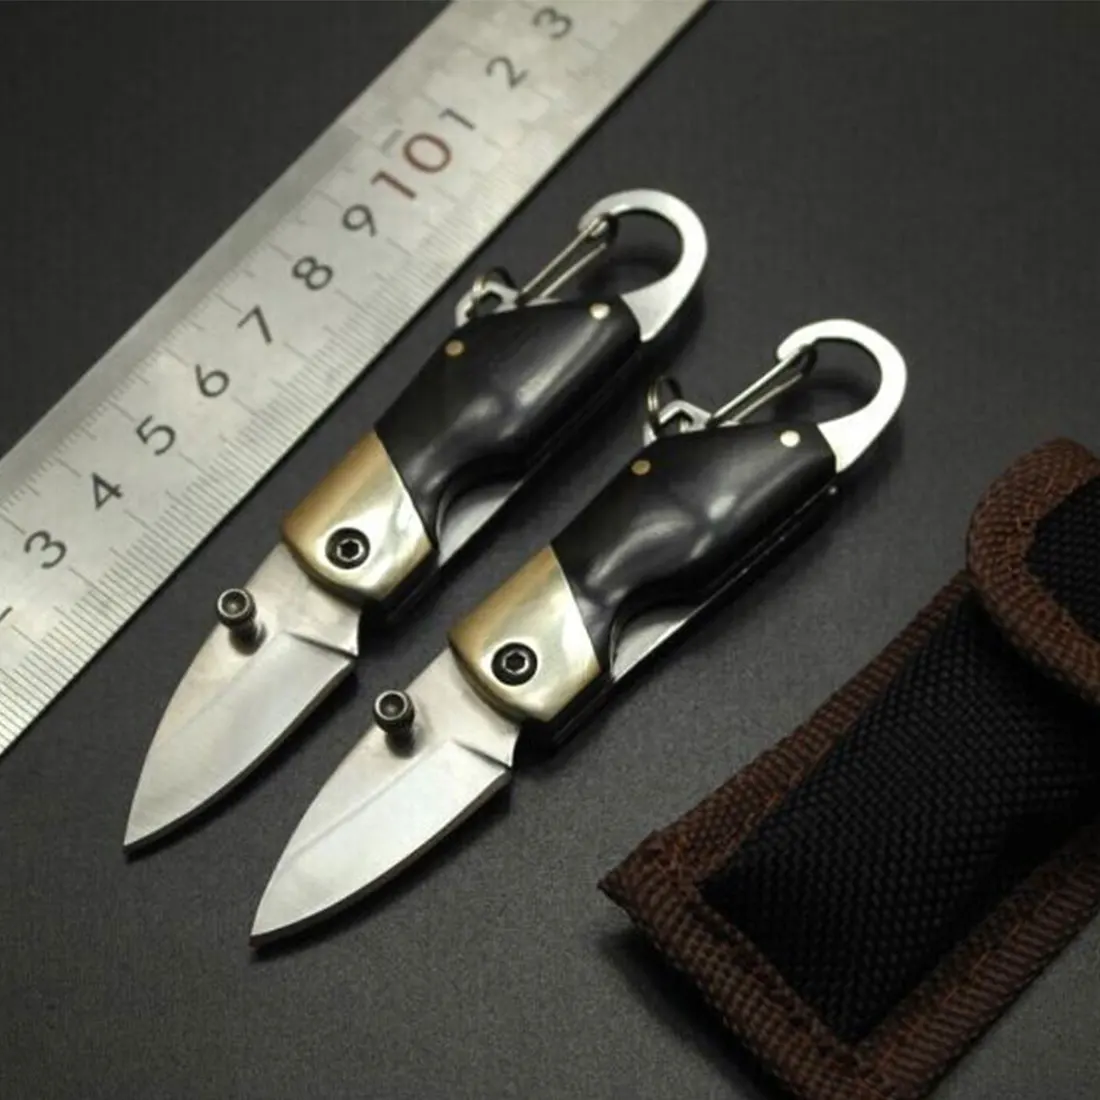 VOLEEDC Hiking camping mini folding knife outdoor survival portable stainless steel knife key chain pocket knife nylon bag